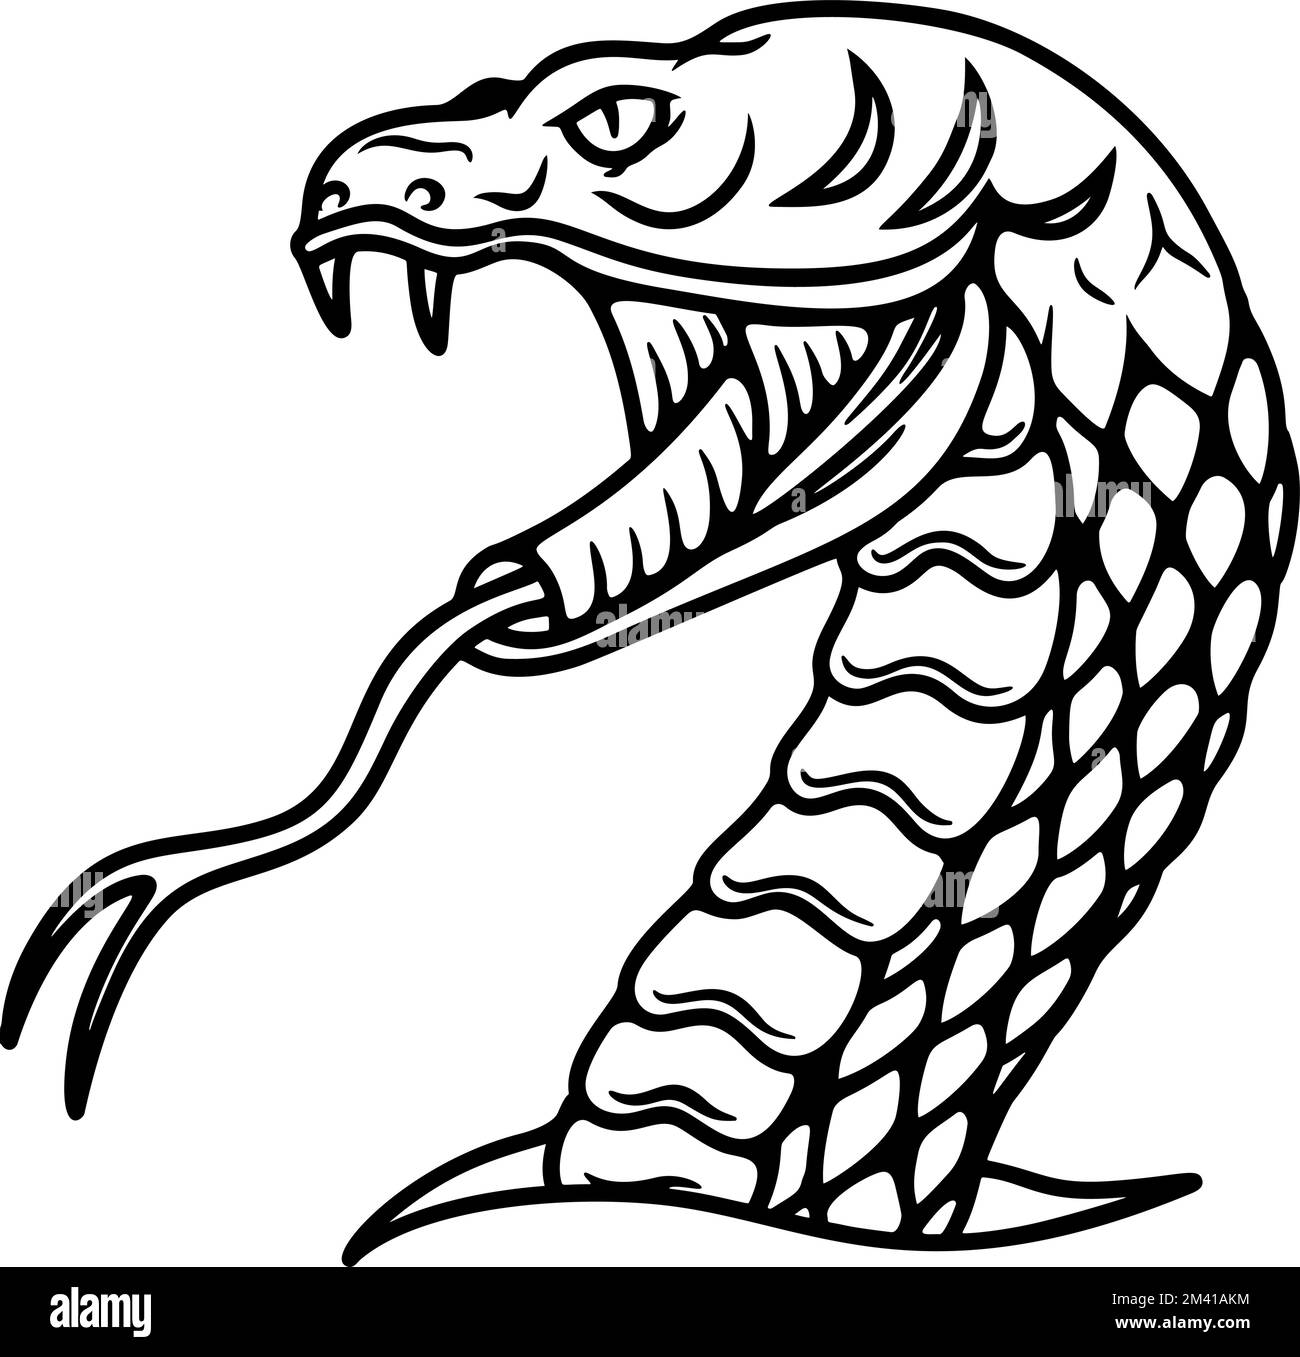 Illustration of snake head in engraving style. Design element for poster, card, banner, emblem, sign. Vector illustration Stock Vector